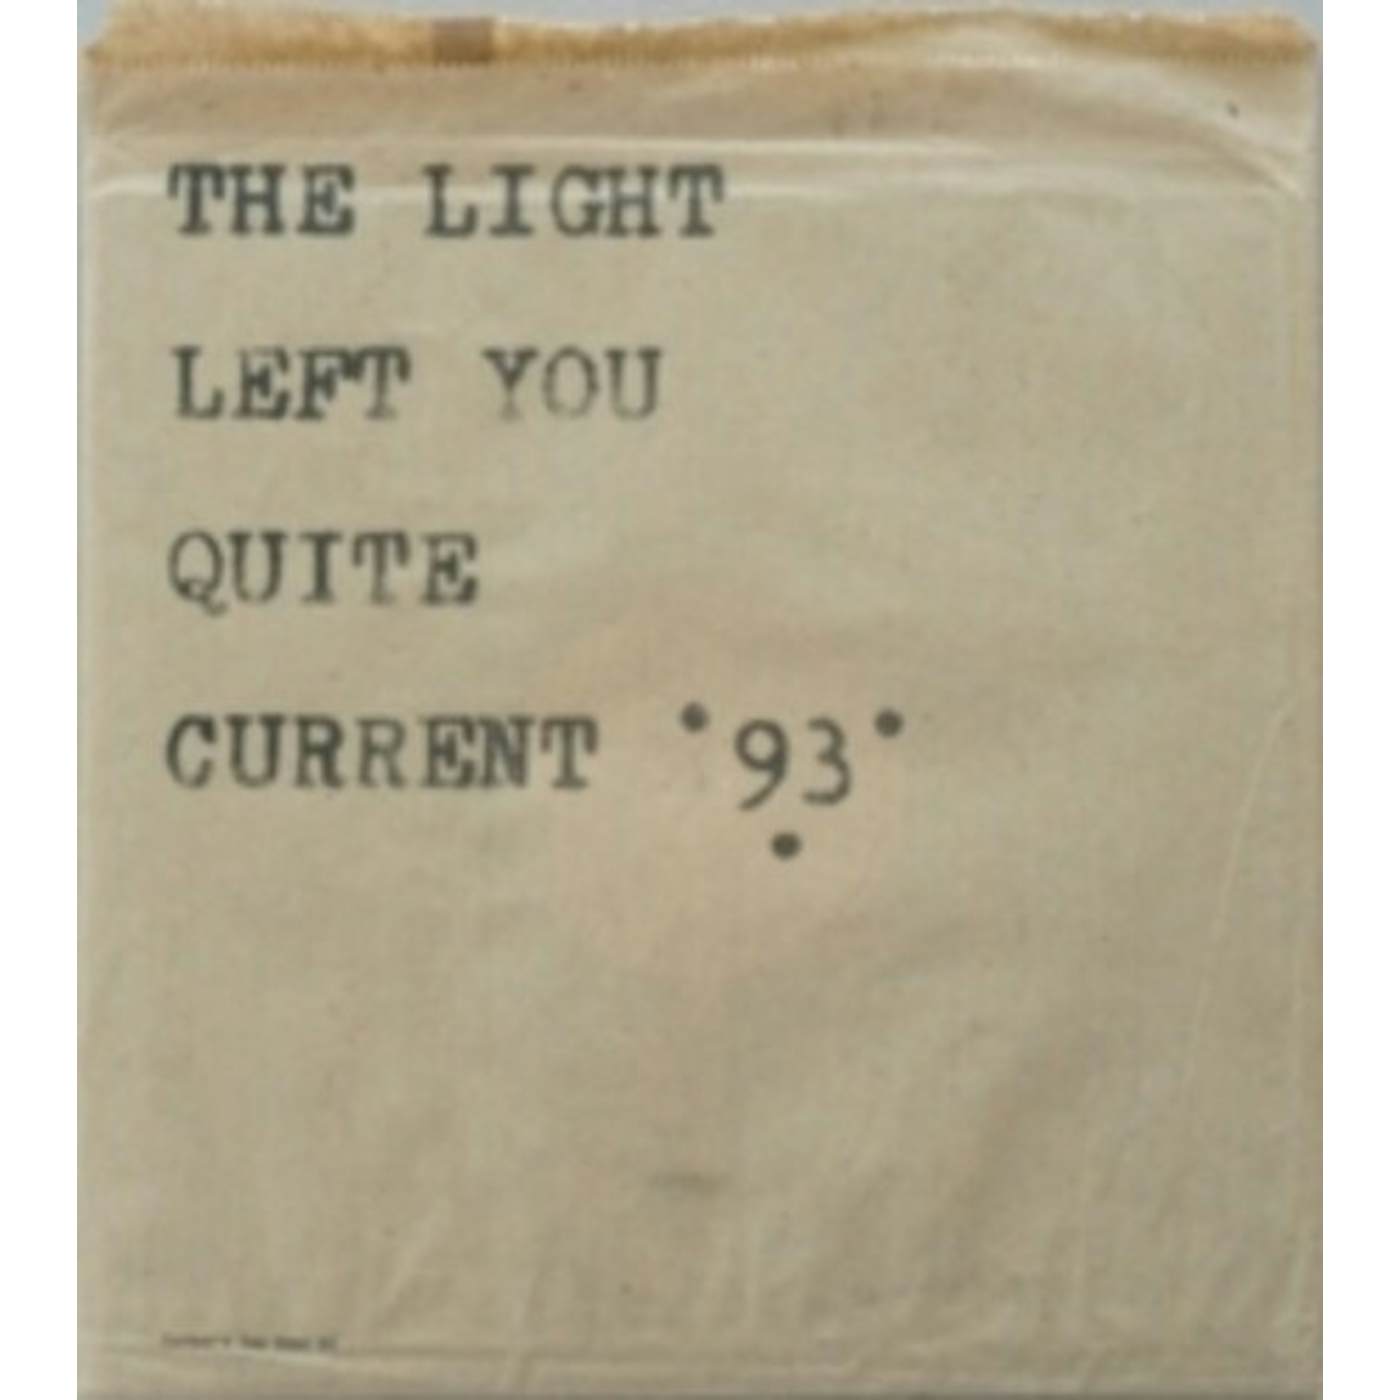 Current 93 LIGHT LEFT YOU QUITE Vinyl Record